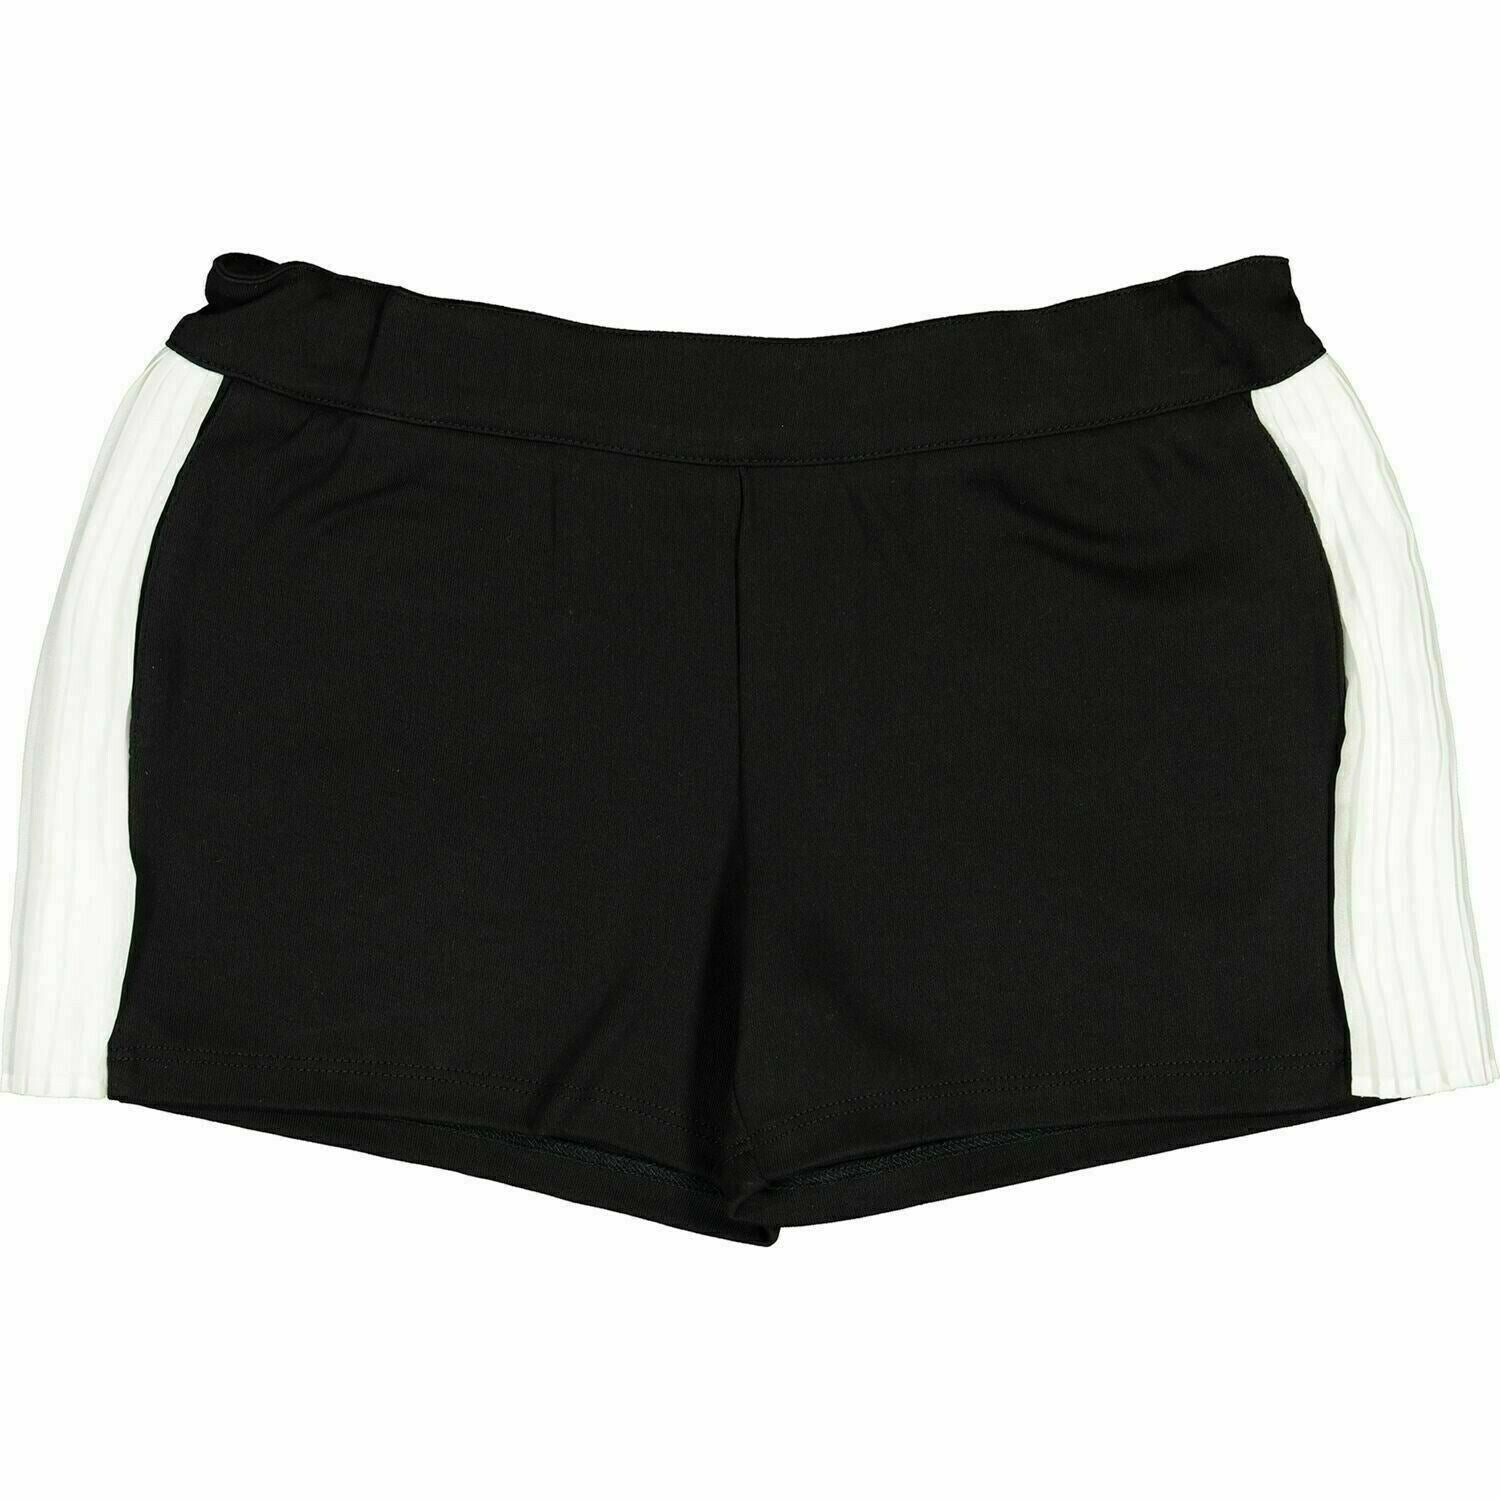 KARL LAGERFELD Girls' Kids' Black and White Shorts, size 8 years